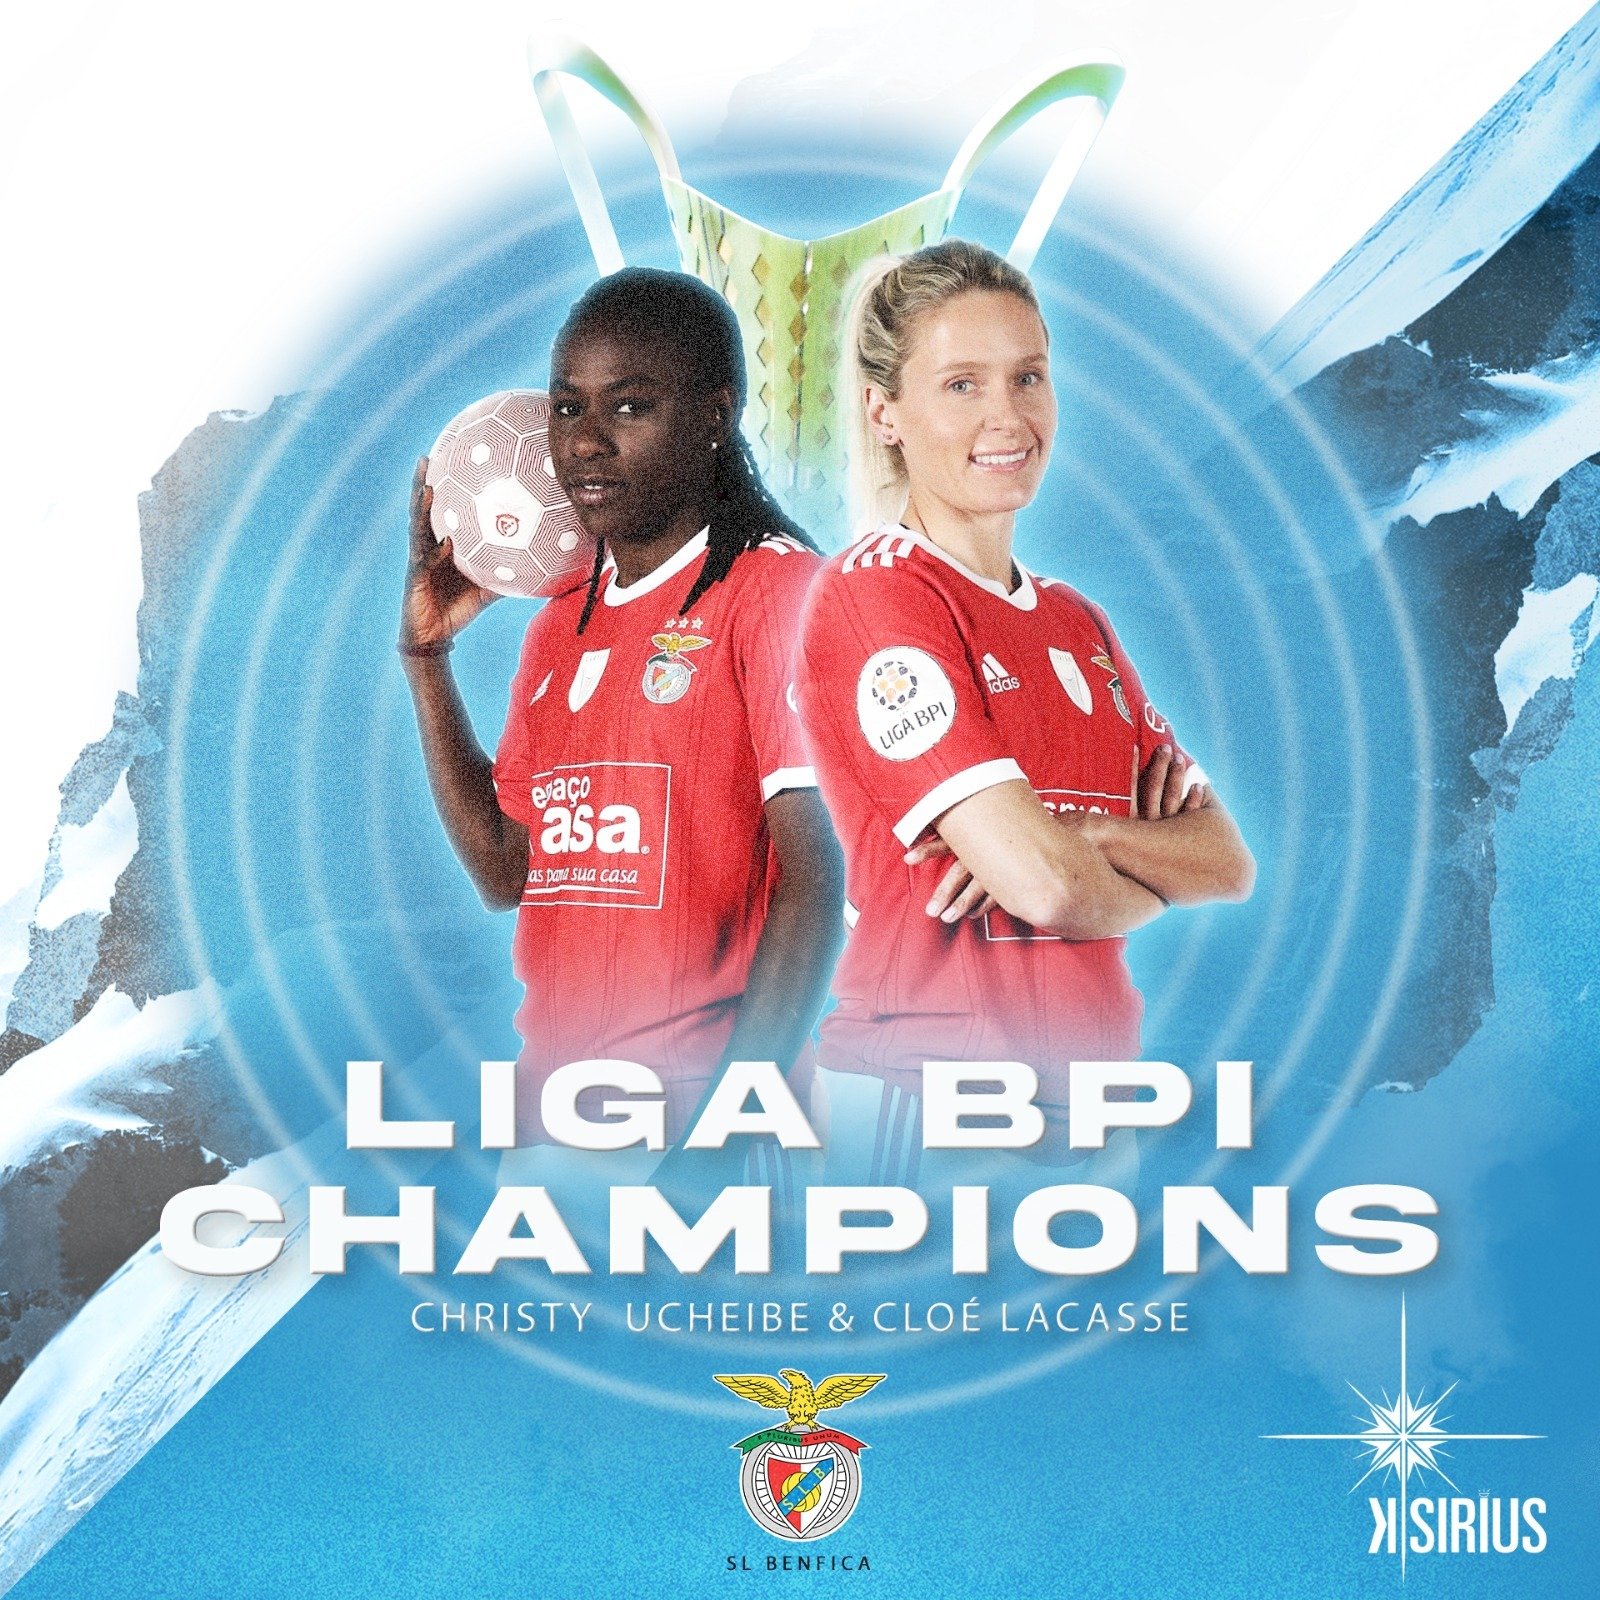 Liga BPI Champions: Christy Ucheibe and Cloé Lacasse (SL Benfica)